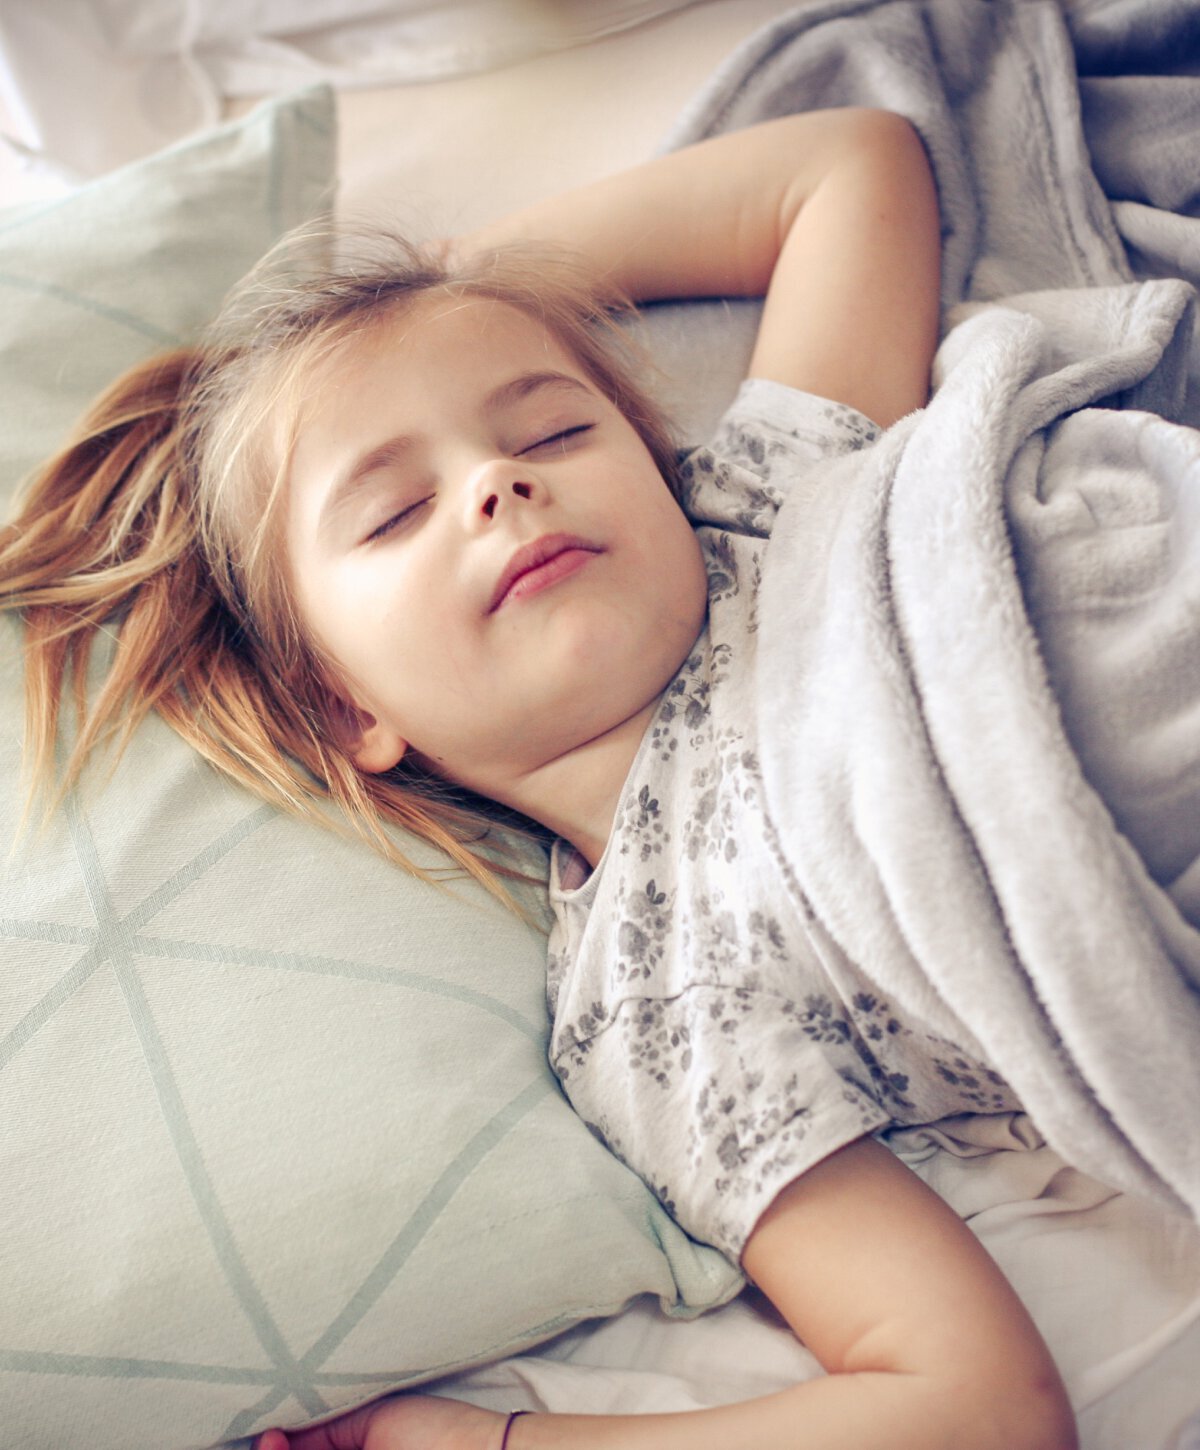 pediatric sleep apnea treatment patient model sleeping in bed